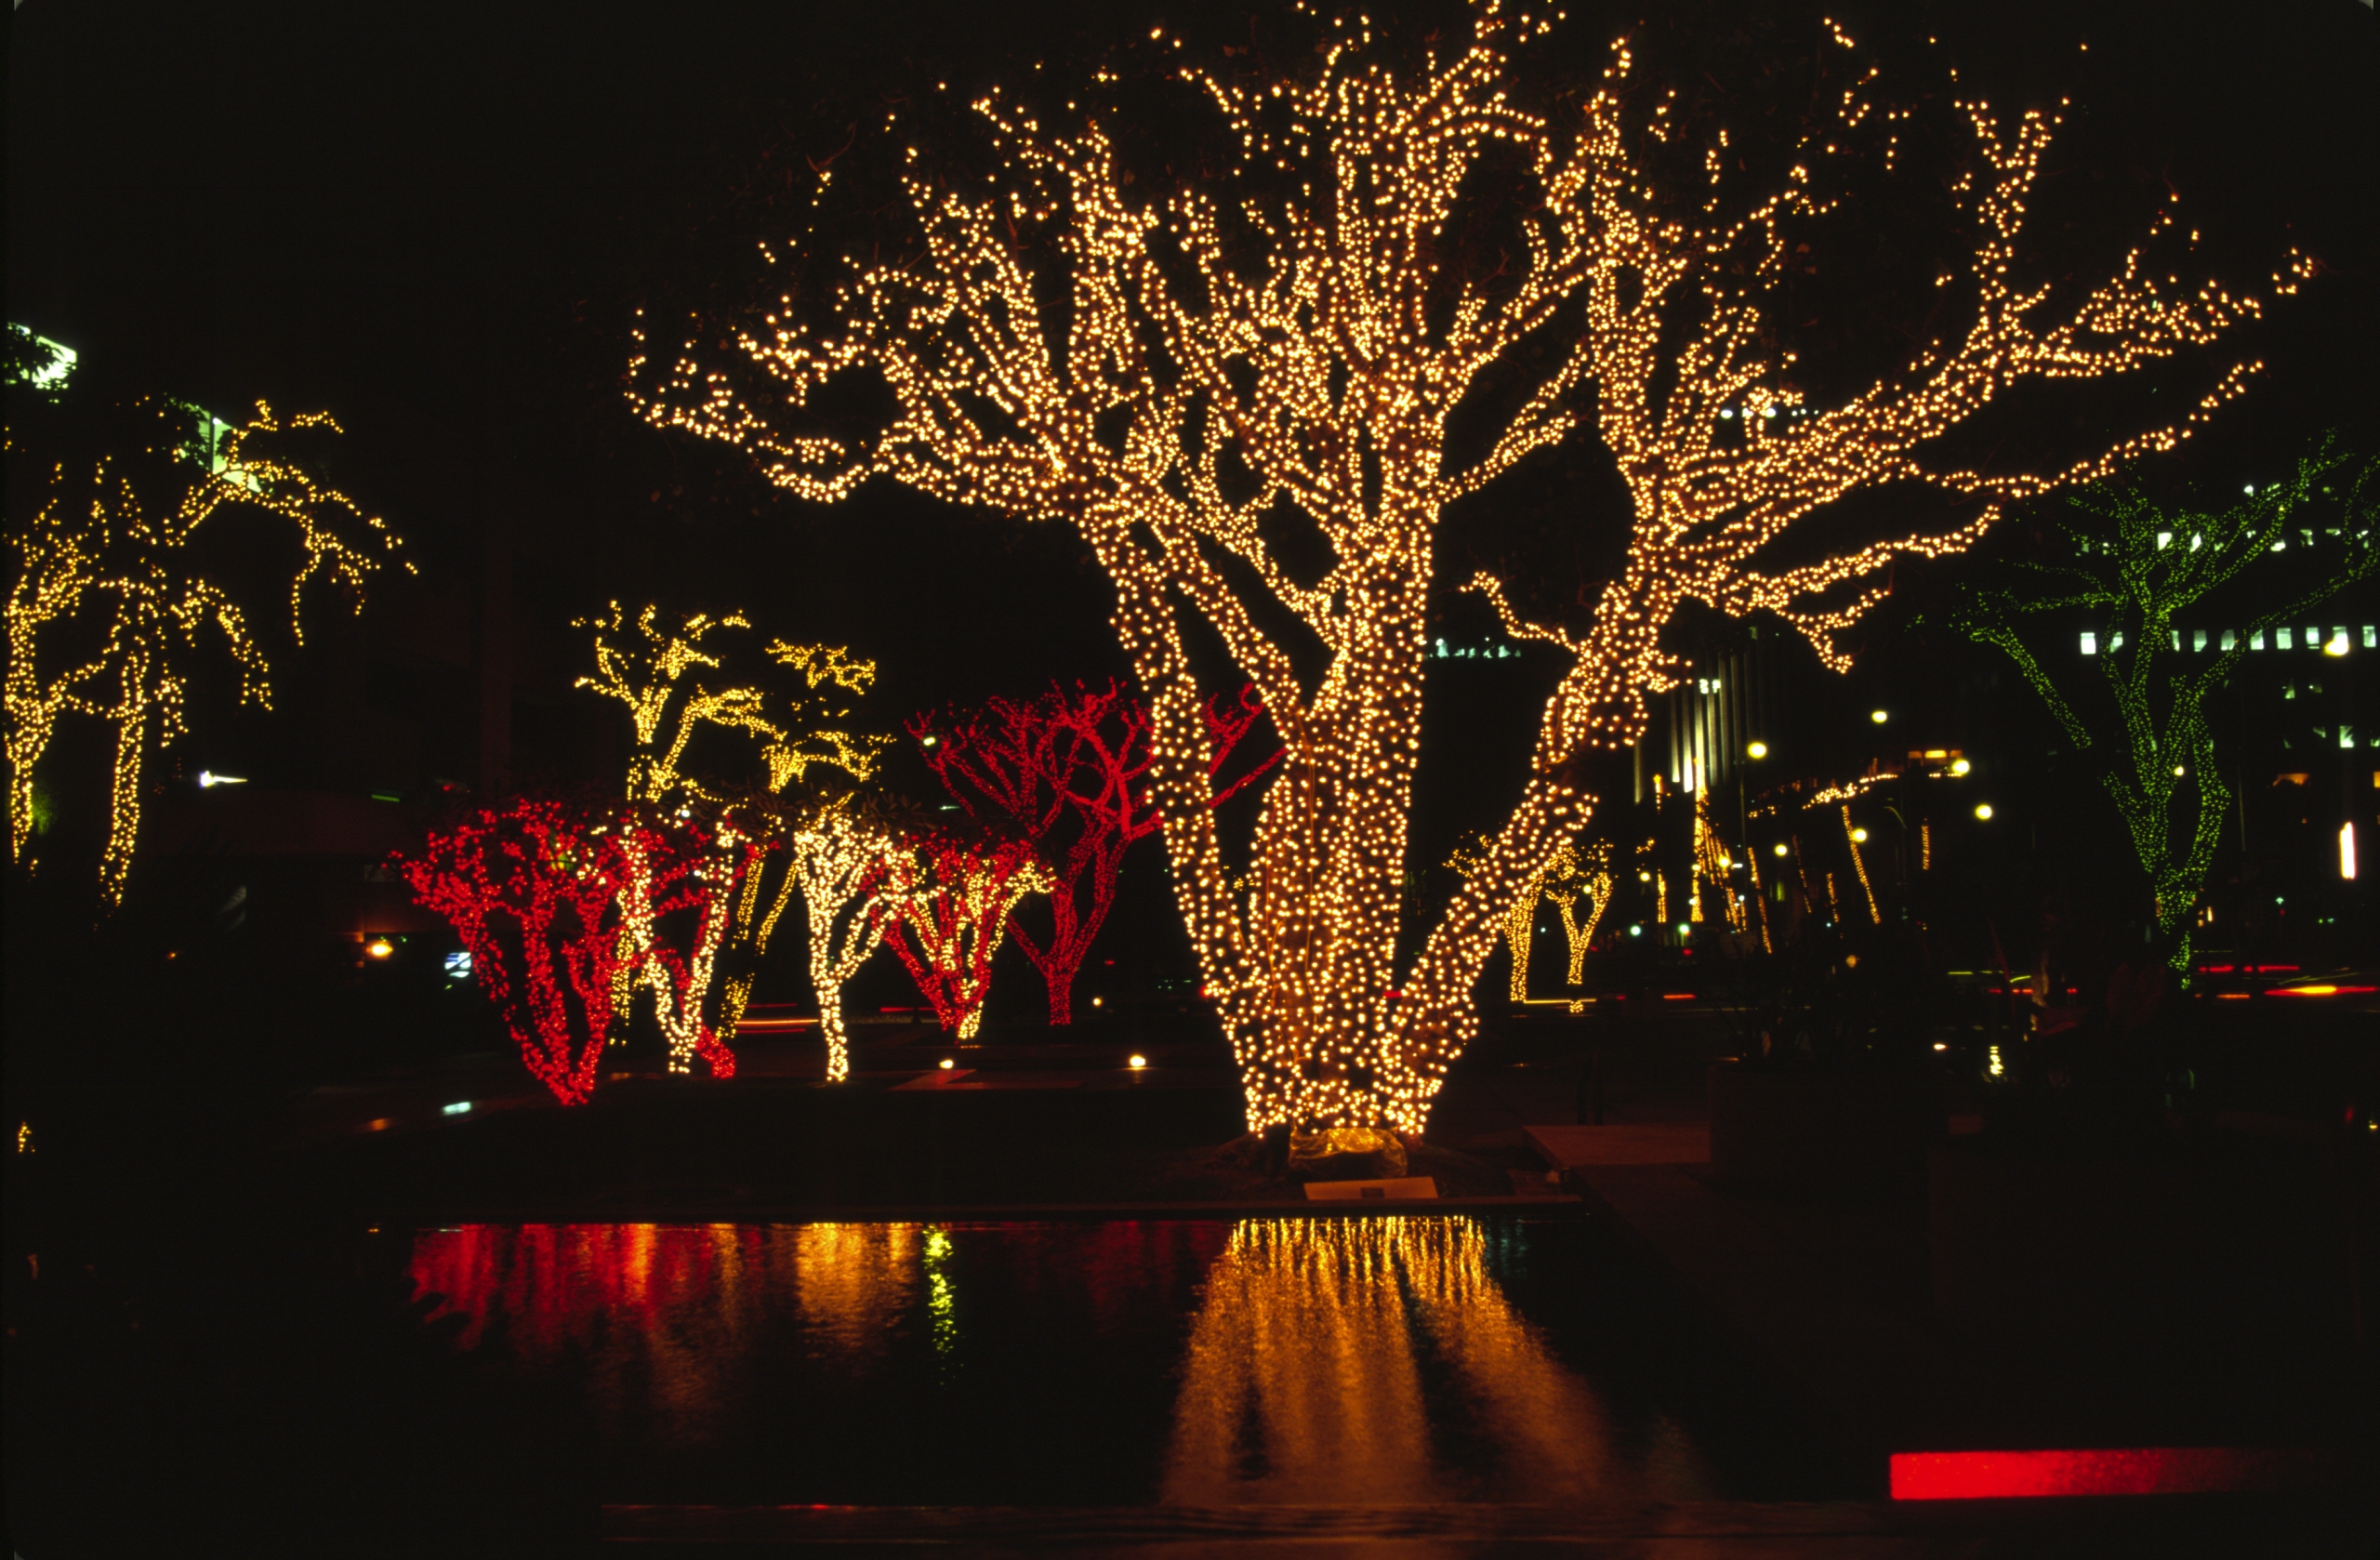 A tree lit up with holiday lights near Prince Waikiki in Honolulu Hawaii